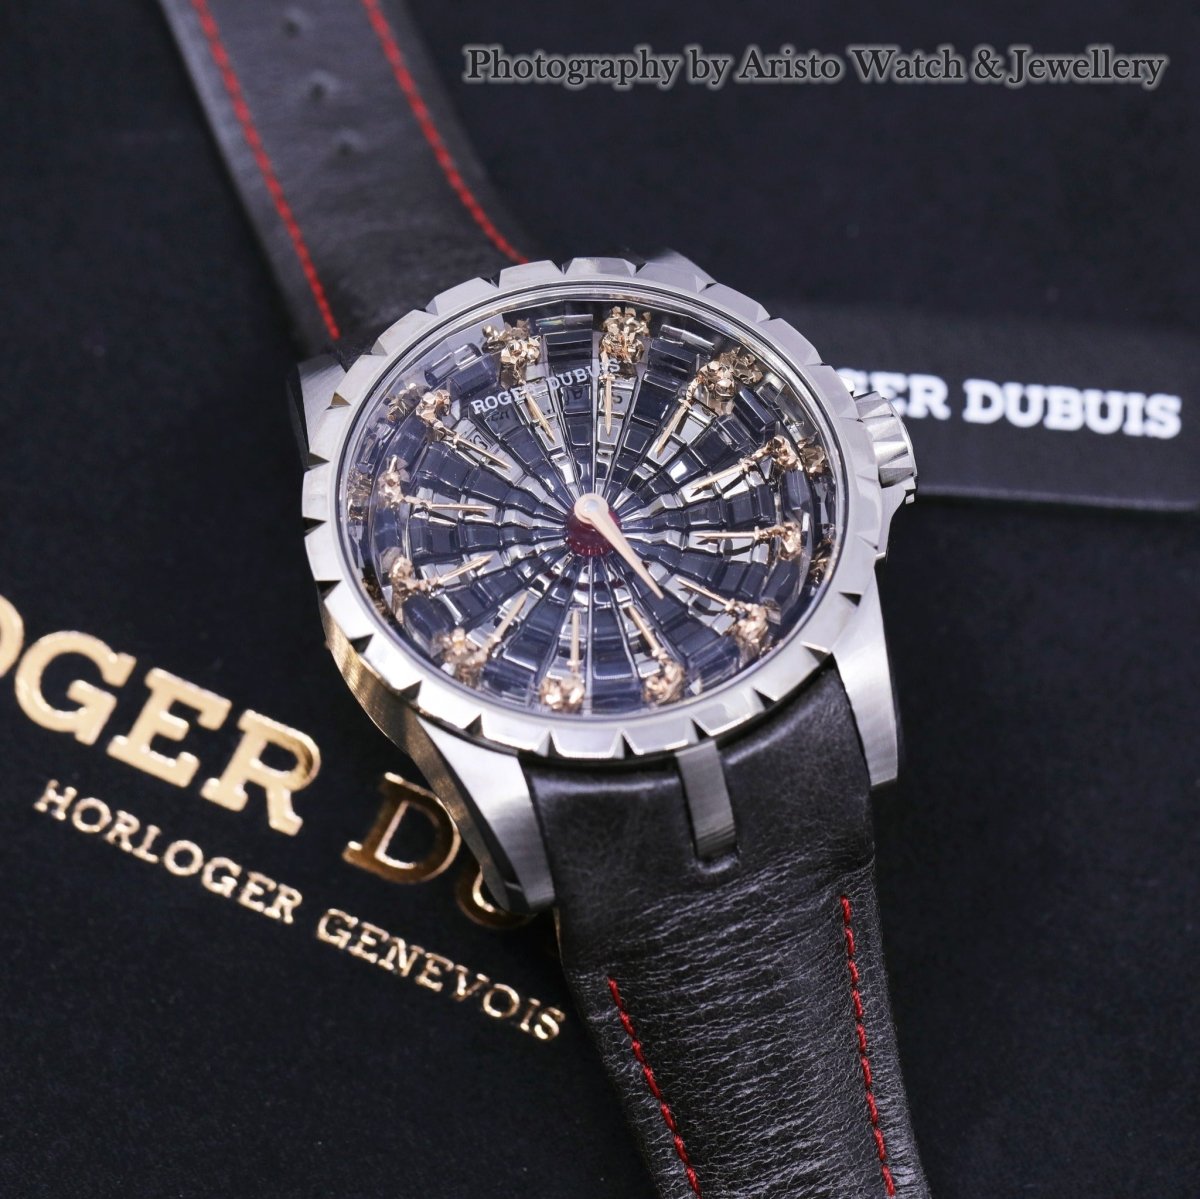 Roger Dubuis DBEX0806 Excalibur- Aristo Watch & Jewellery